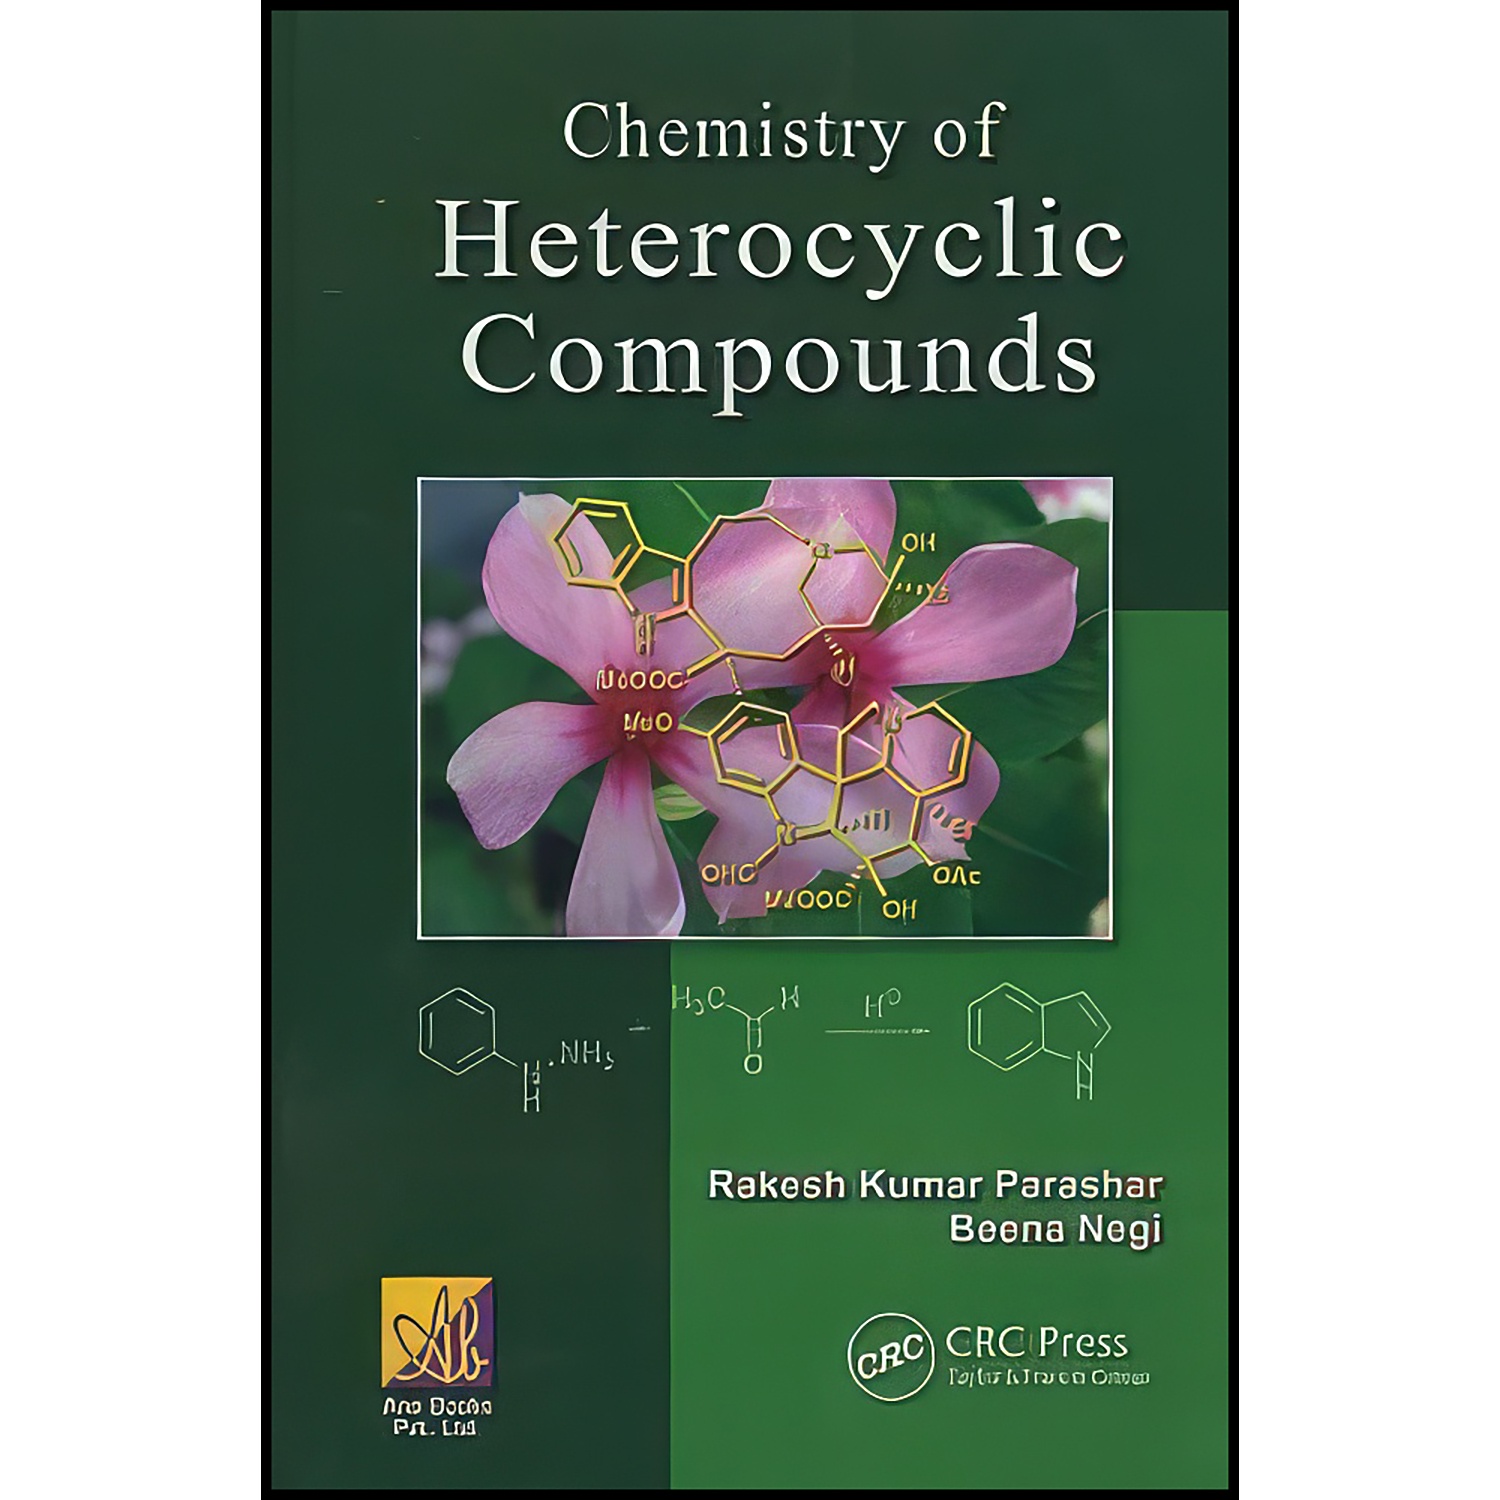 کتاب Chemistry of Heterocyclic Compounds اثر R. K. Parashar انتشارات CRC Press